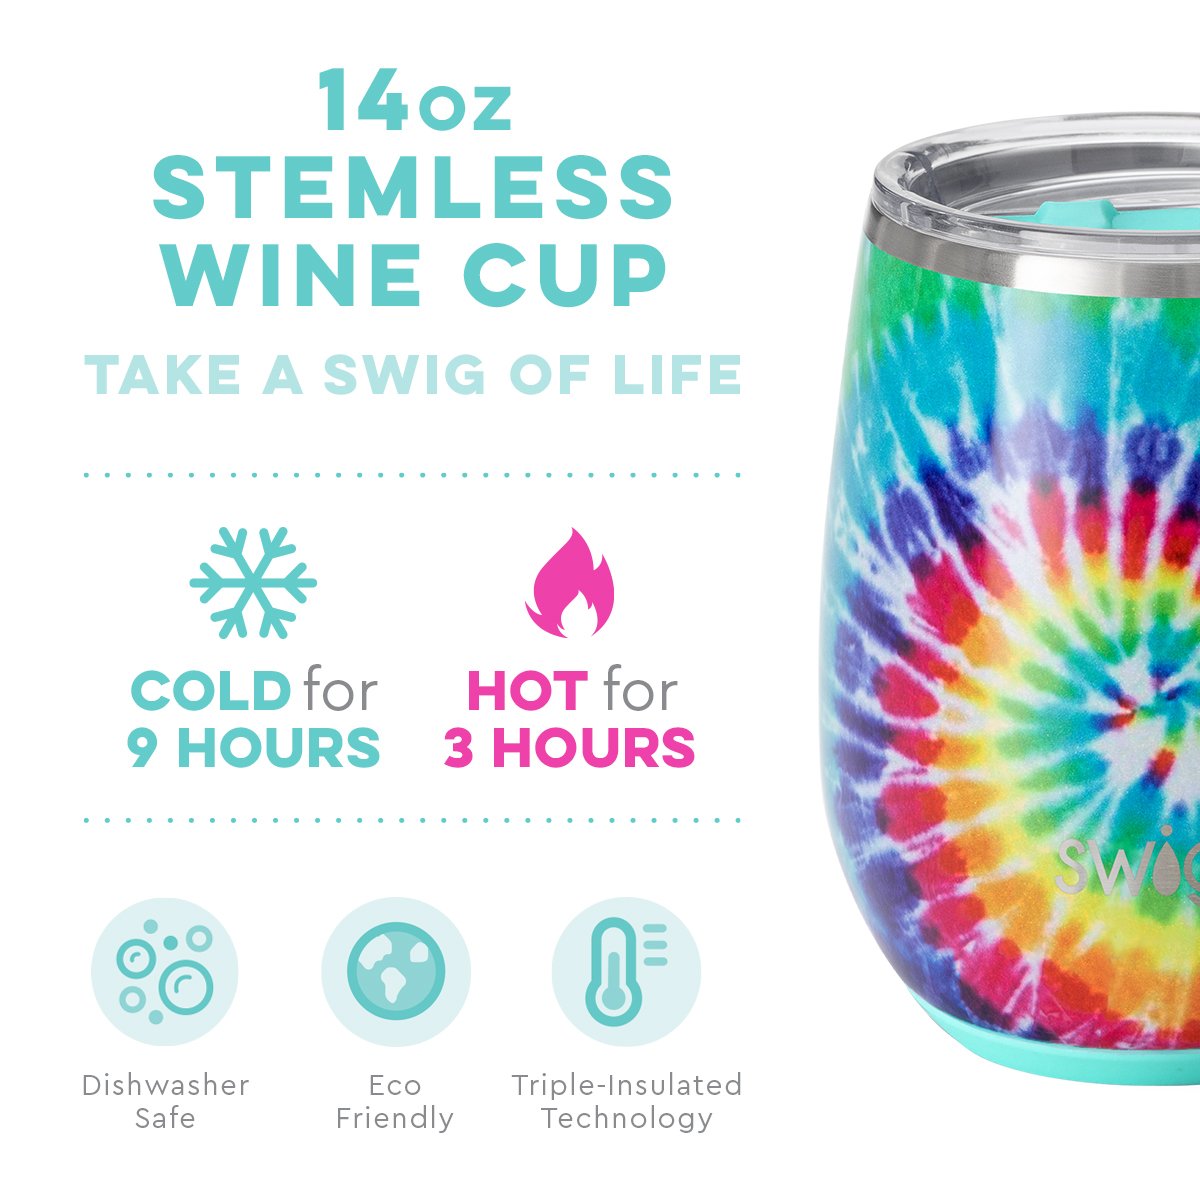 Stemless Wine Cup - Swirled Peace (14oz)